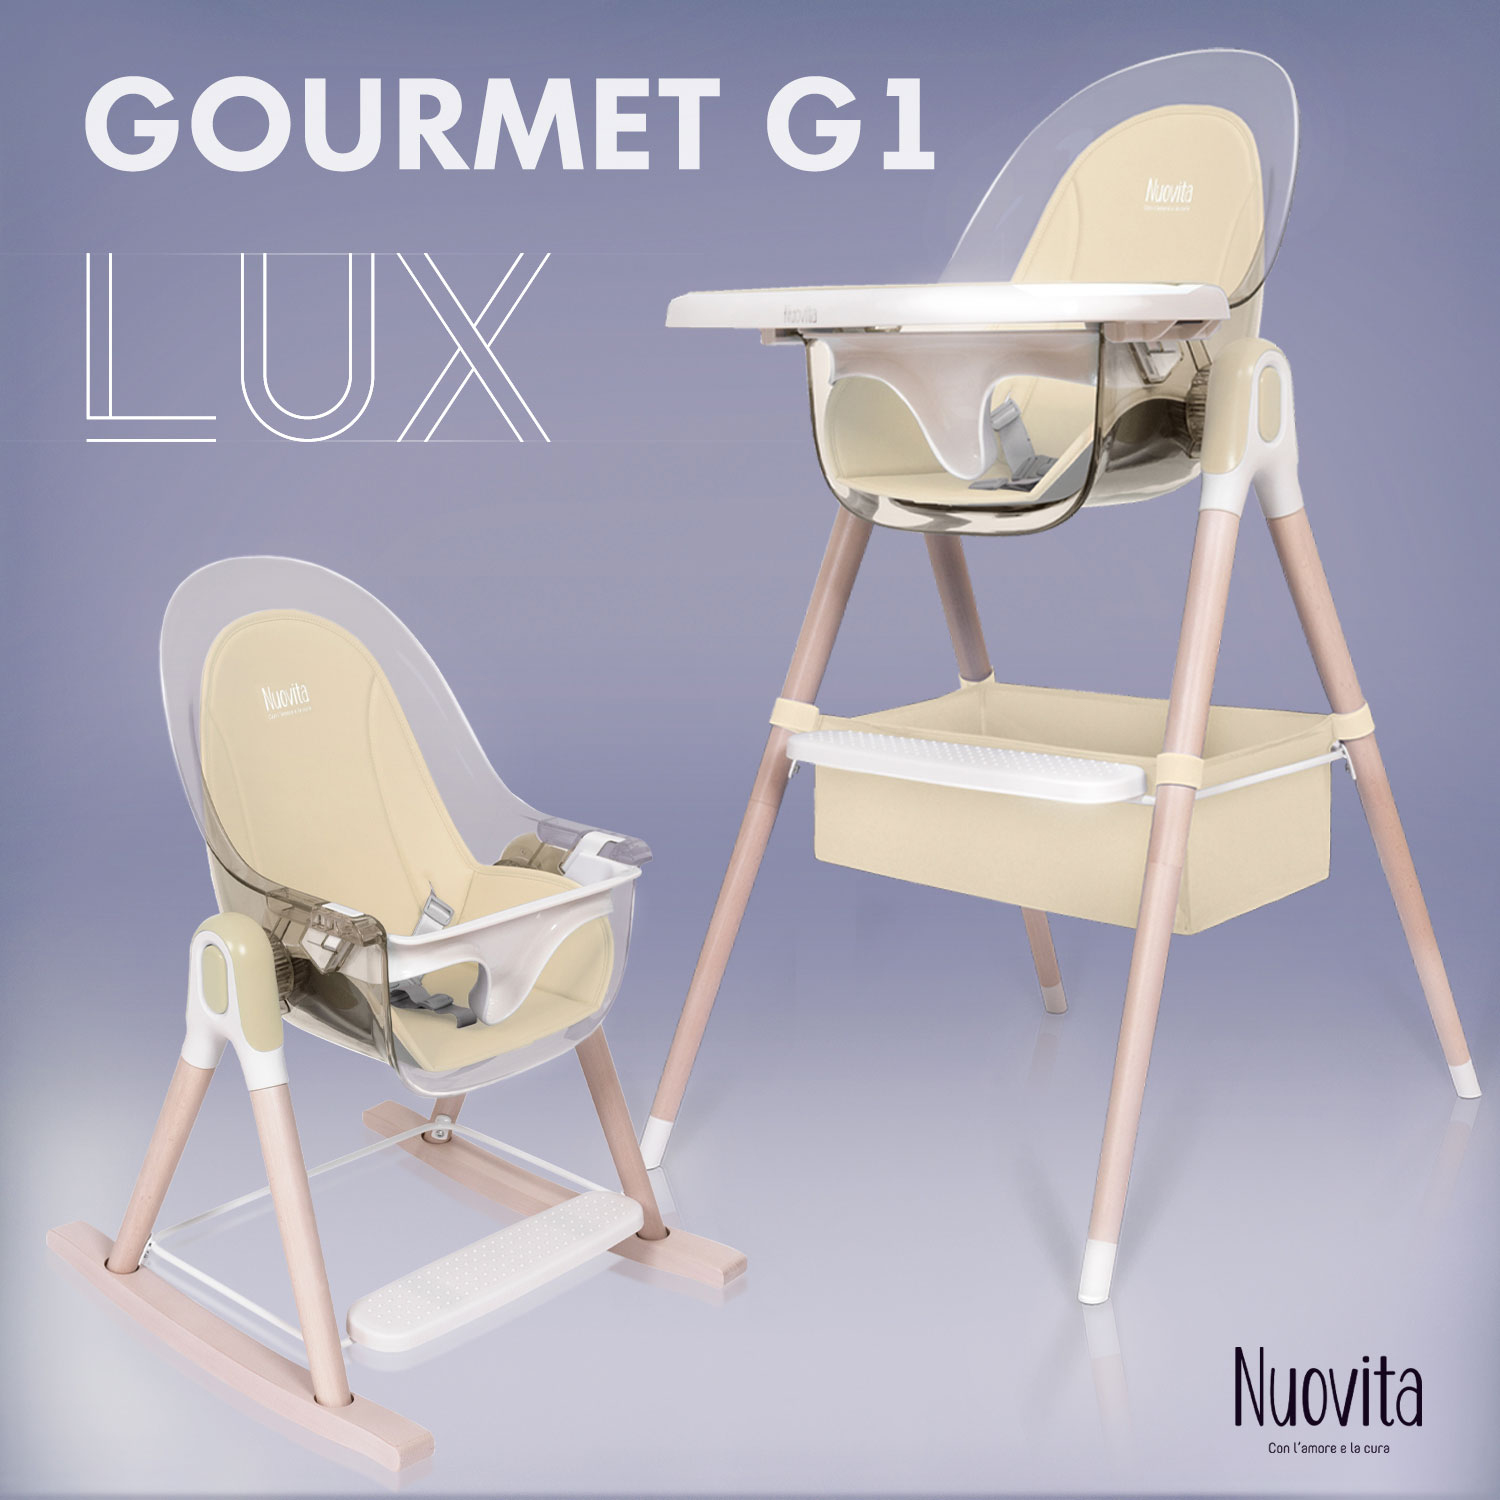 Стульчик для кормления 3 в 1 Nuovita Gourmet G1 Lux (Beige/Бежевый) стульчик для кормления 3 в 1 nuovita gourmet g1 lux blu голубой